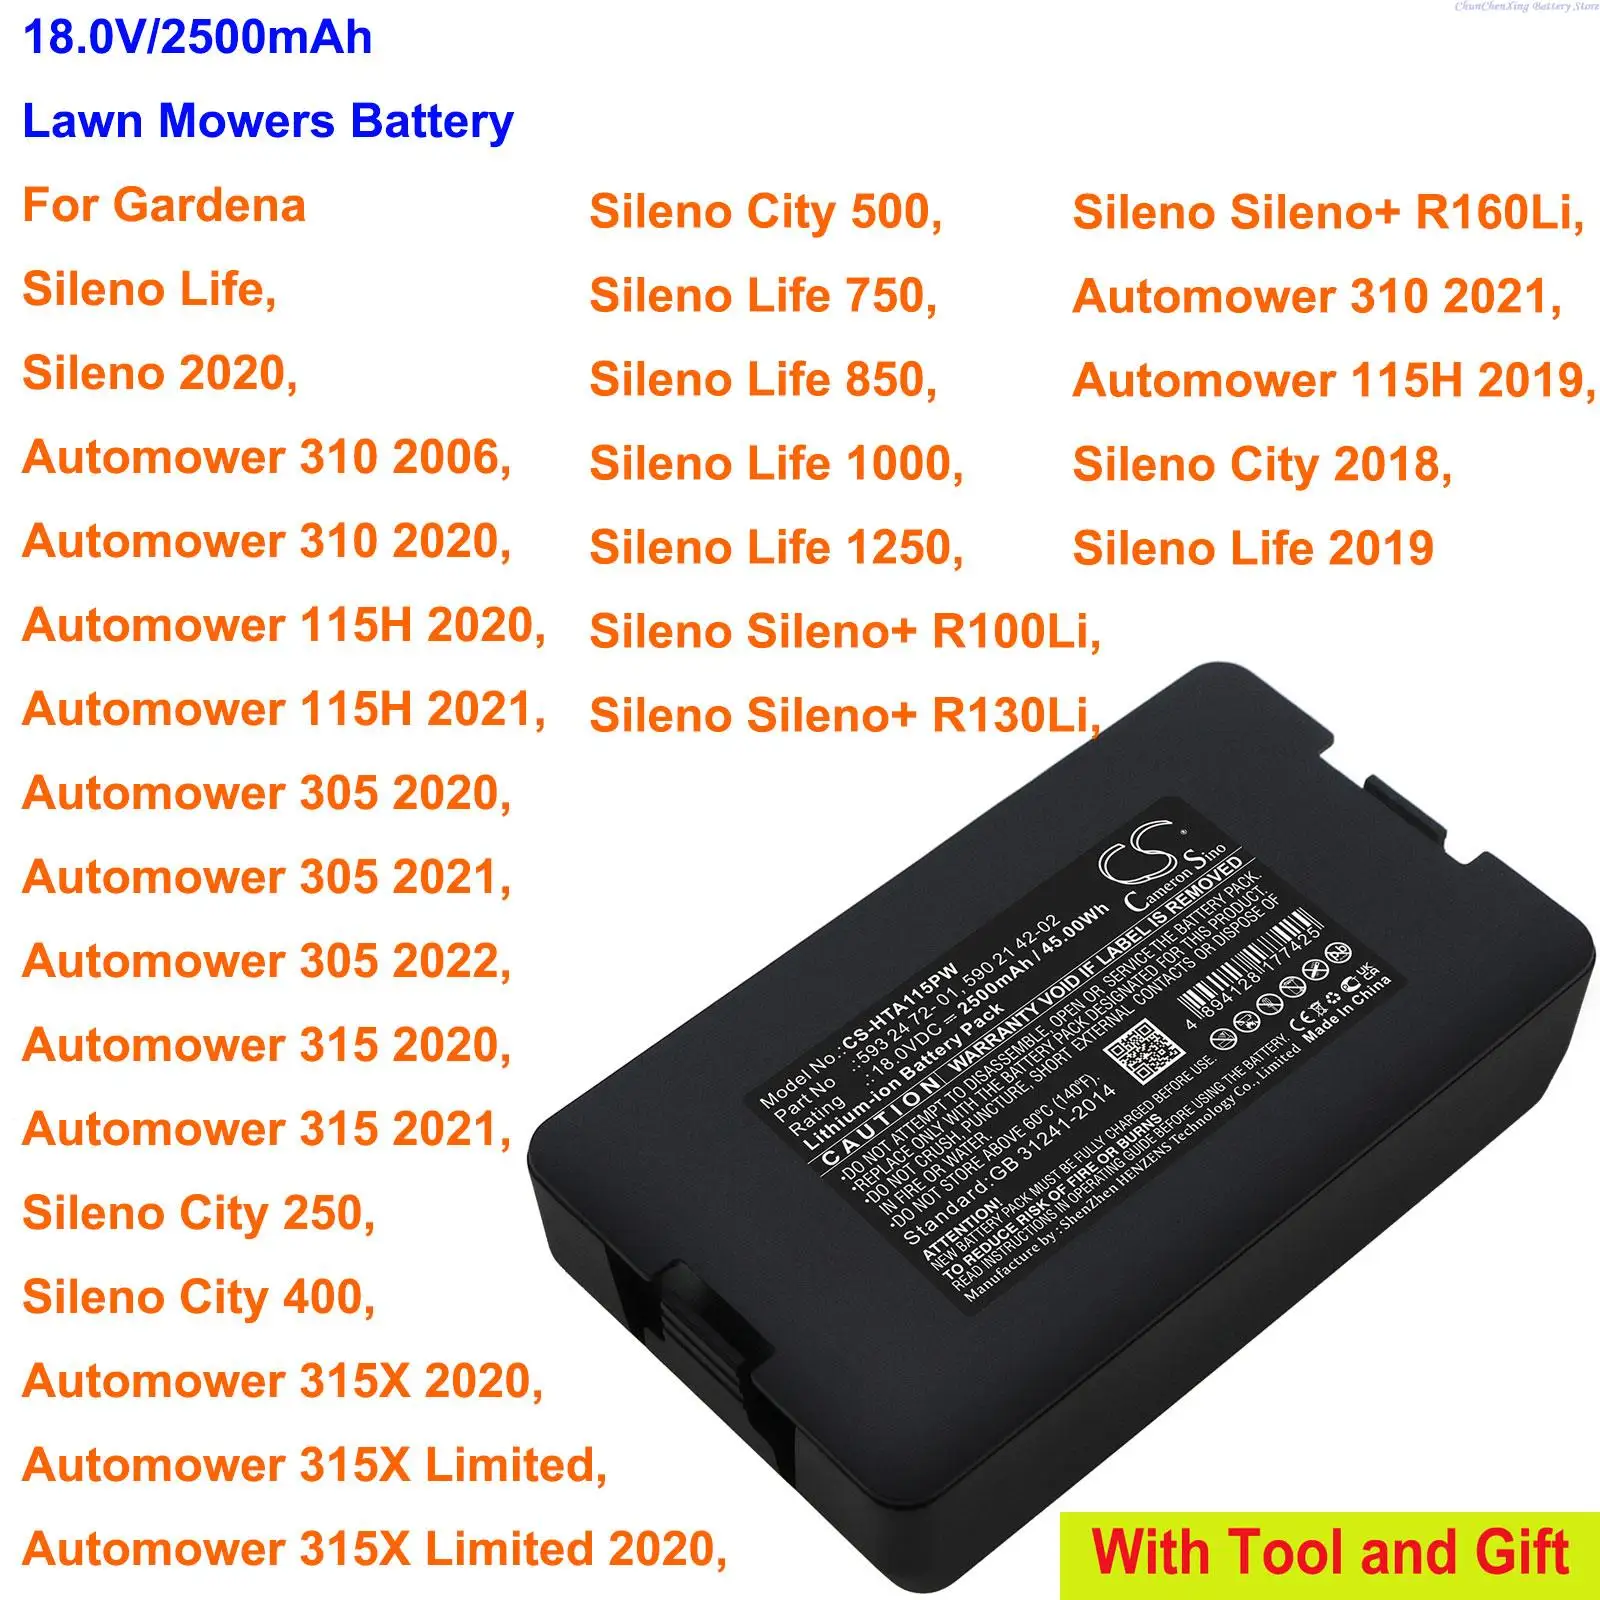 

OrangeYu 2500mAh Lawn Mowers Battery for Gardena Automower 310,115H,305,315,315X,Sileno Life 1250/R100Li/R130Li/R160Li/2019